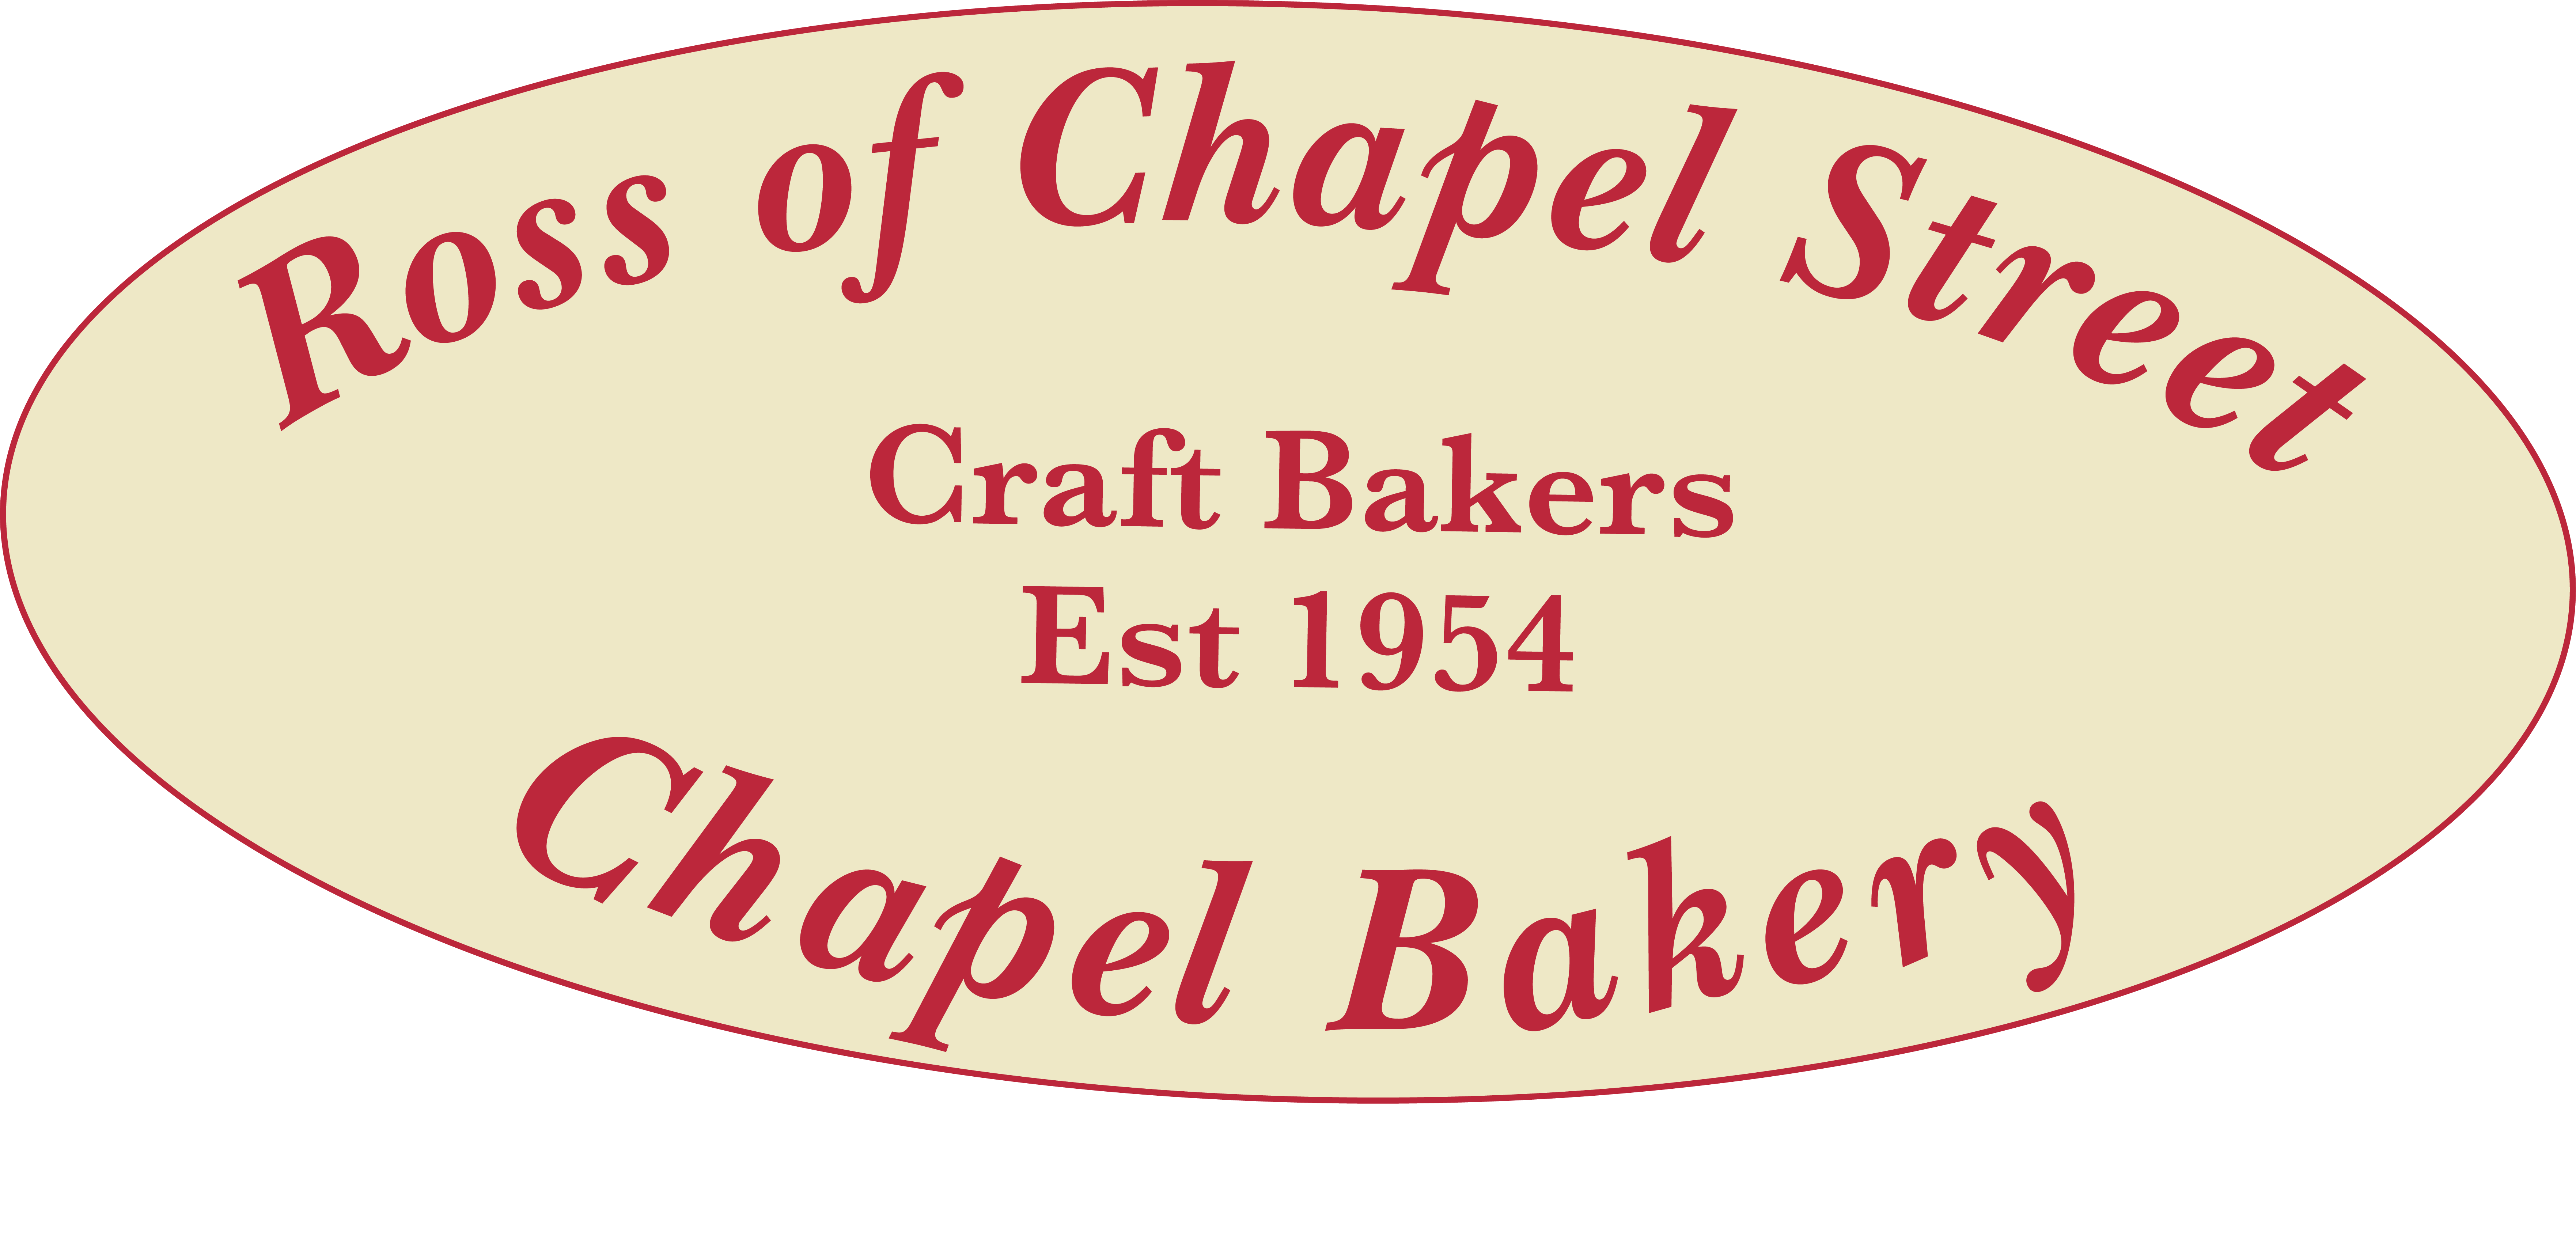 Finest bakery- Chapel street Aberdeen - Ross Bakery